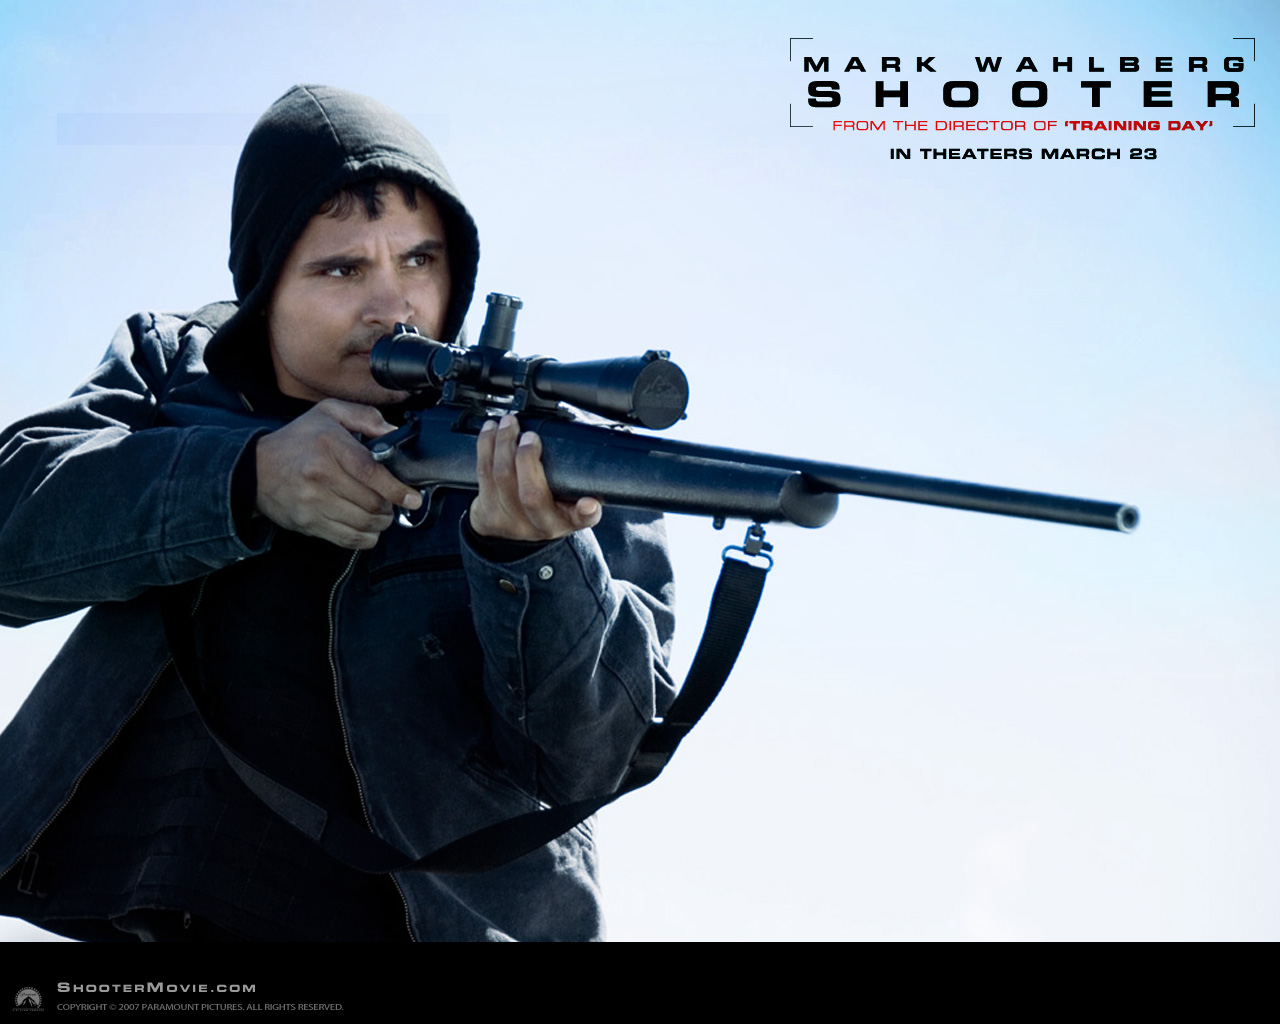 Shooter  Backgrounds, Compatible - PC, Mobile, Gadgets| 1280x1024 px